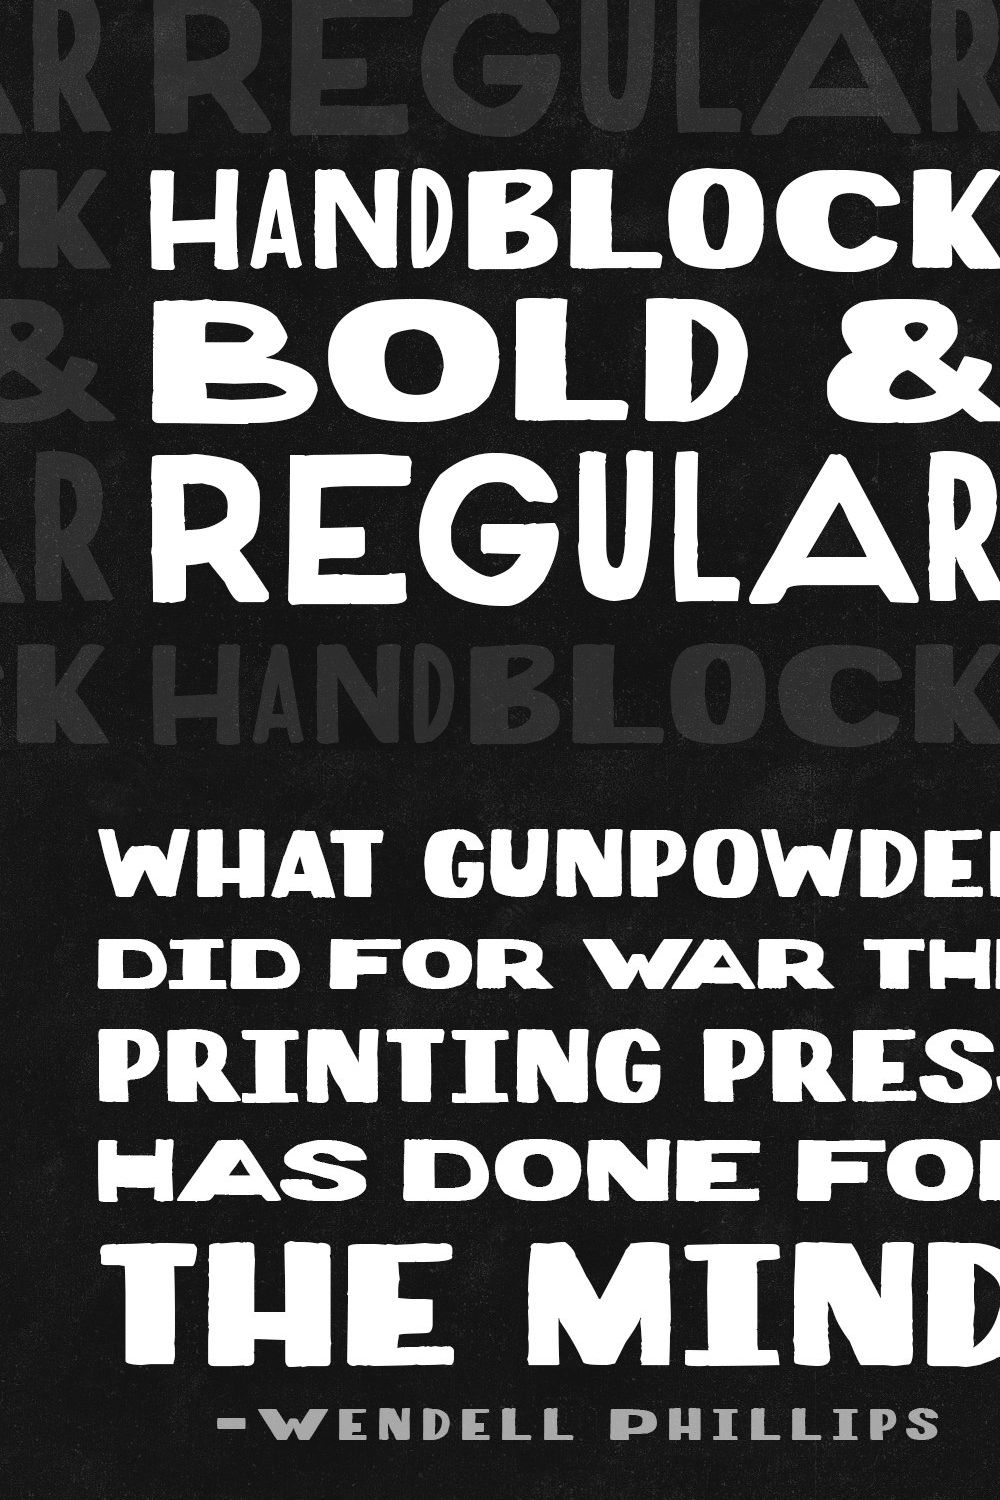 HandBlock Bold & Regular pinterest preview image.